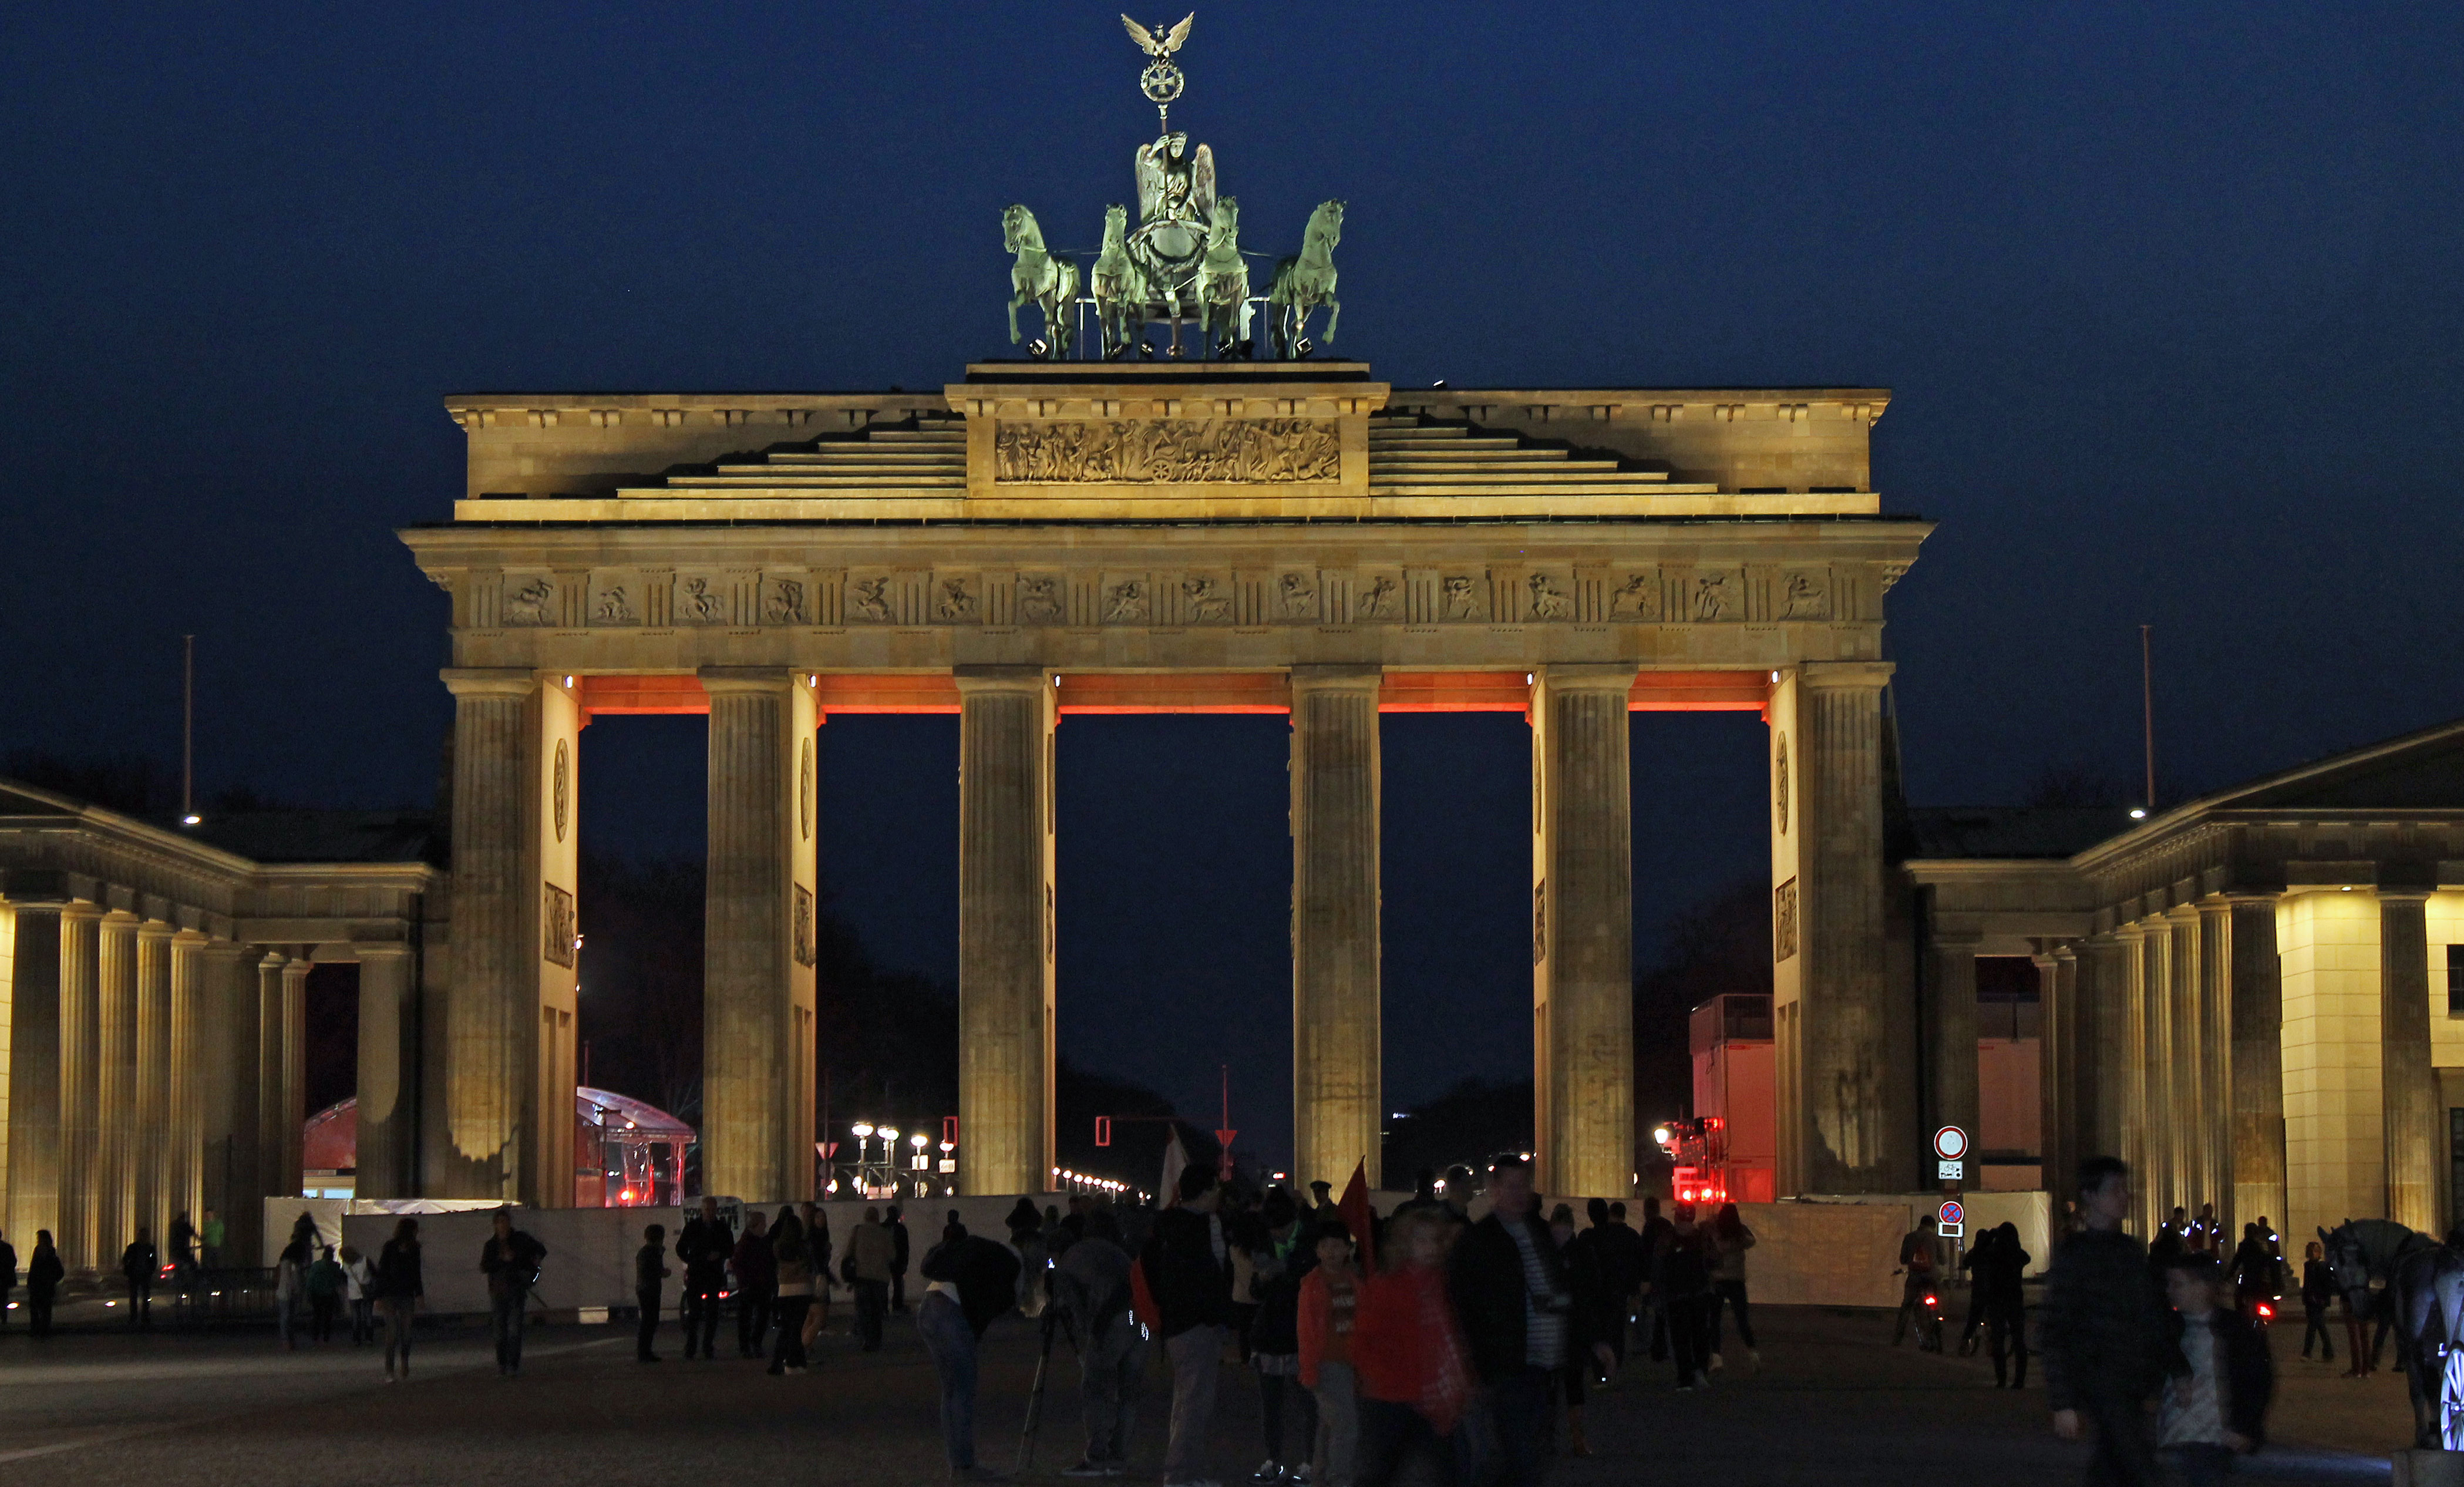 The Brandenburg Gate, Berlin, Germany lit up against a night sky